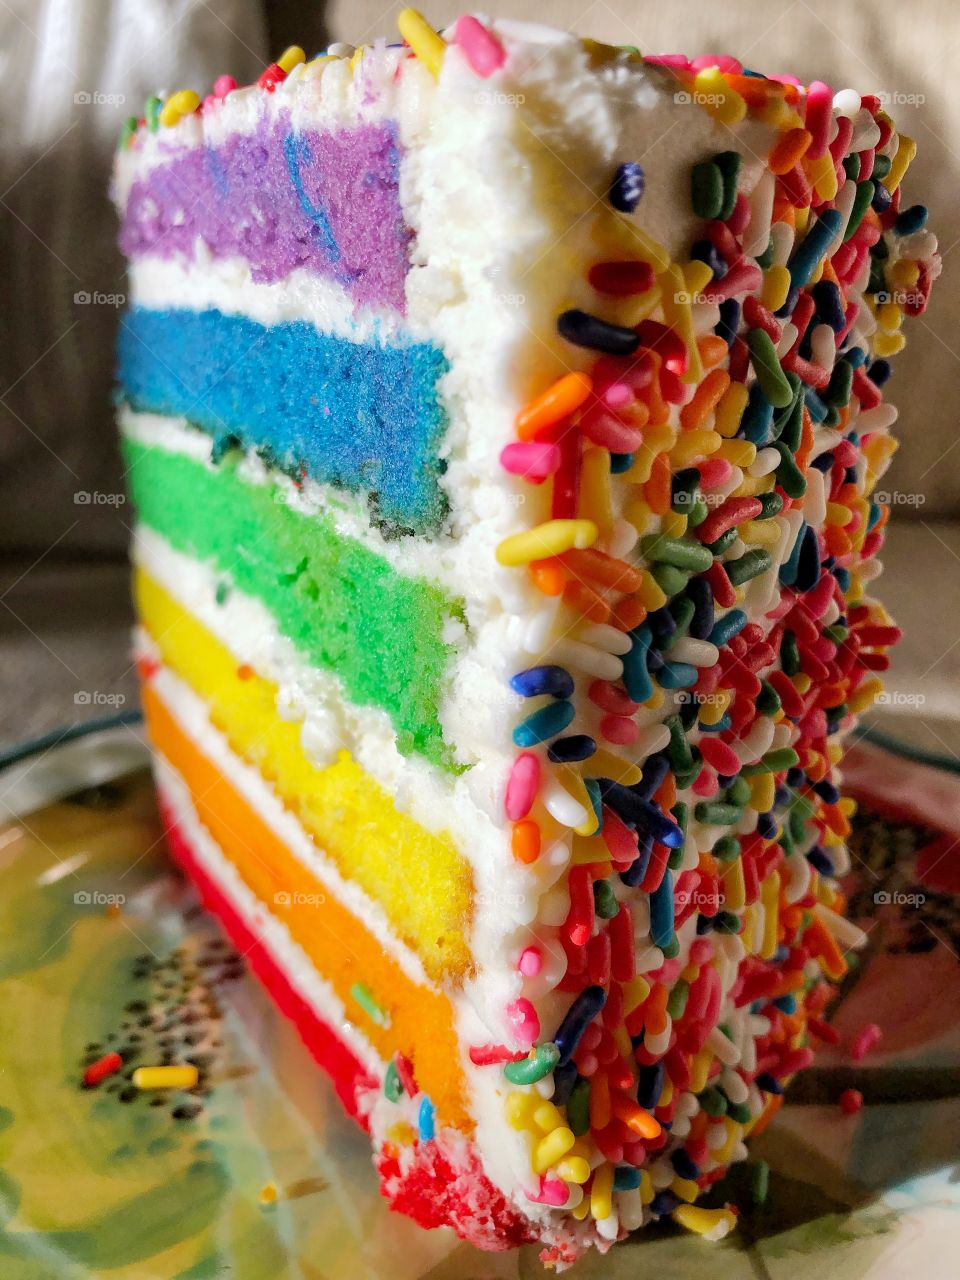 Piece of a Rainbow cake